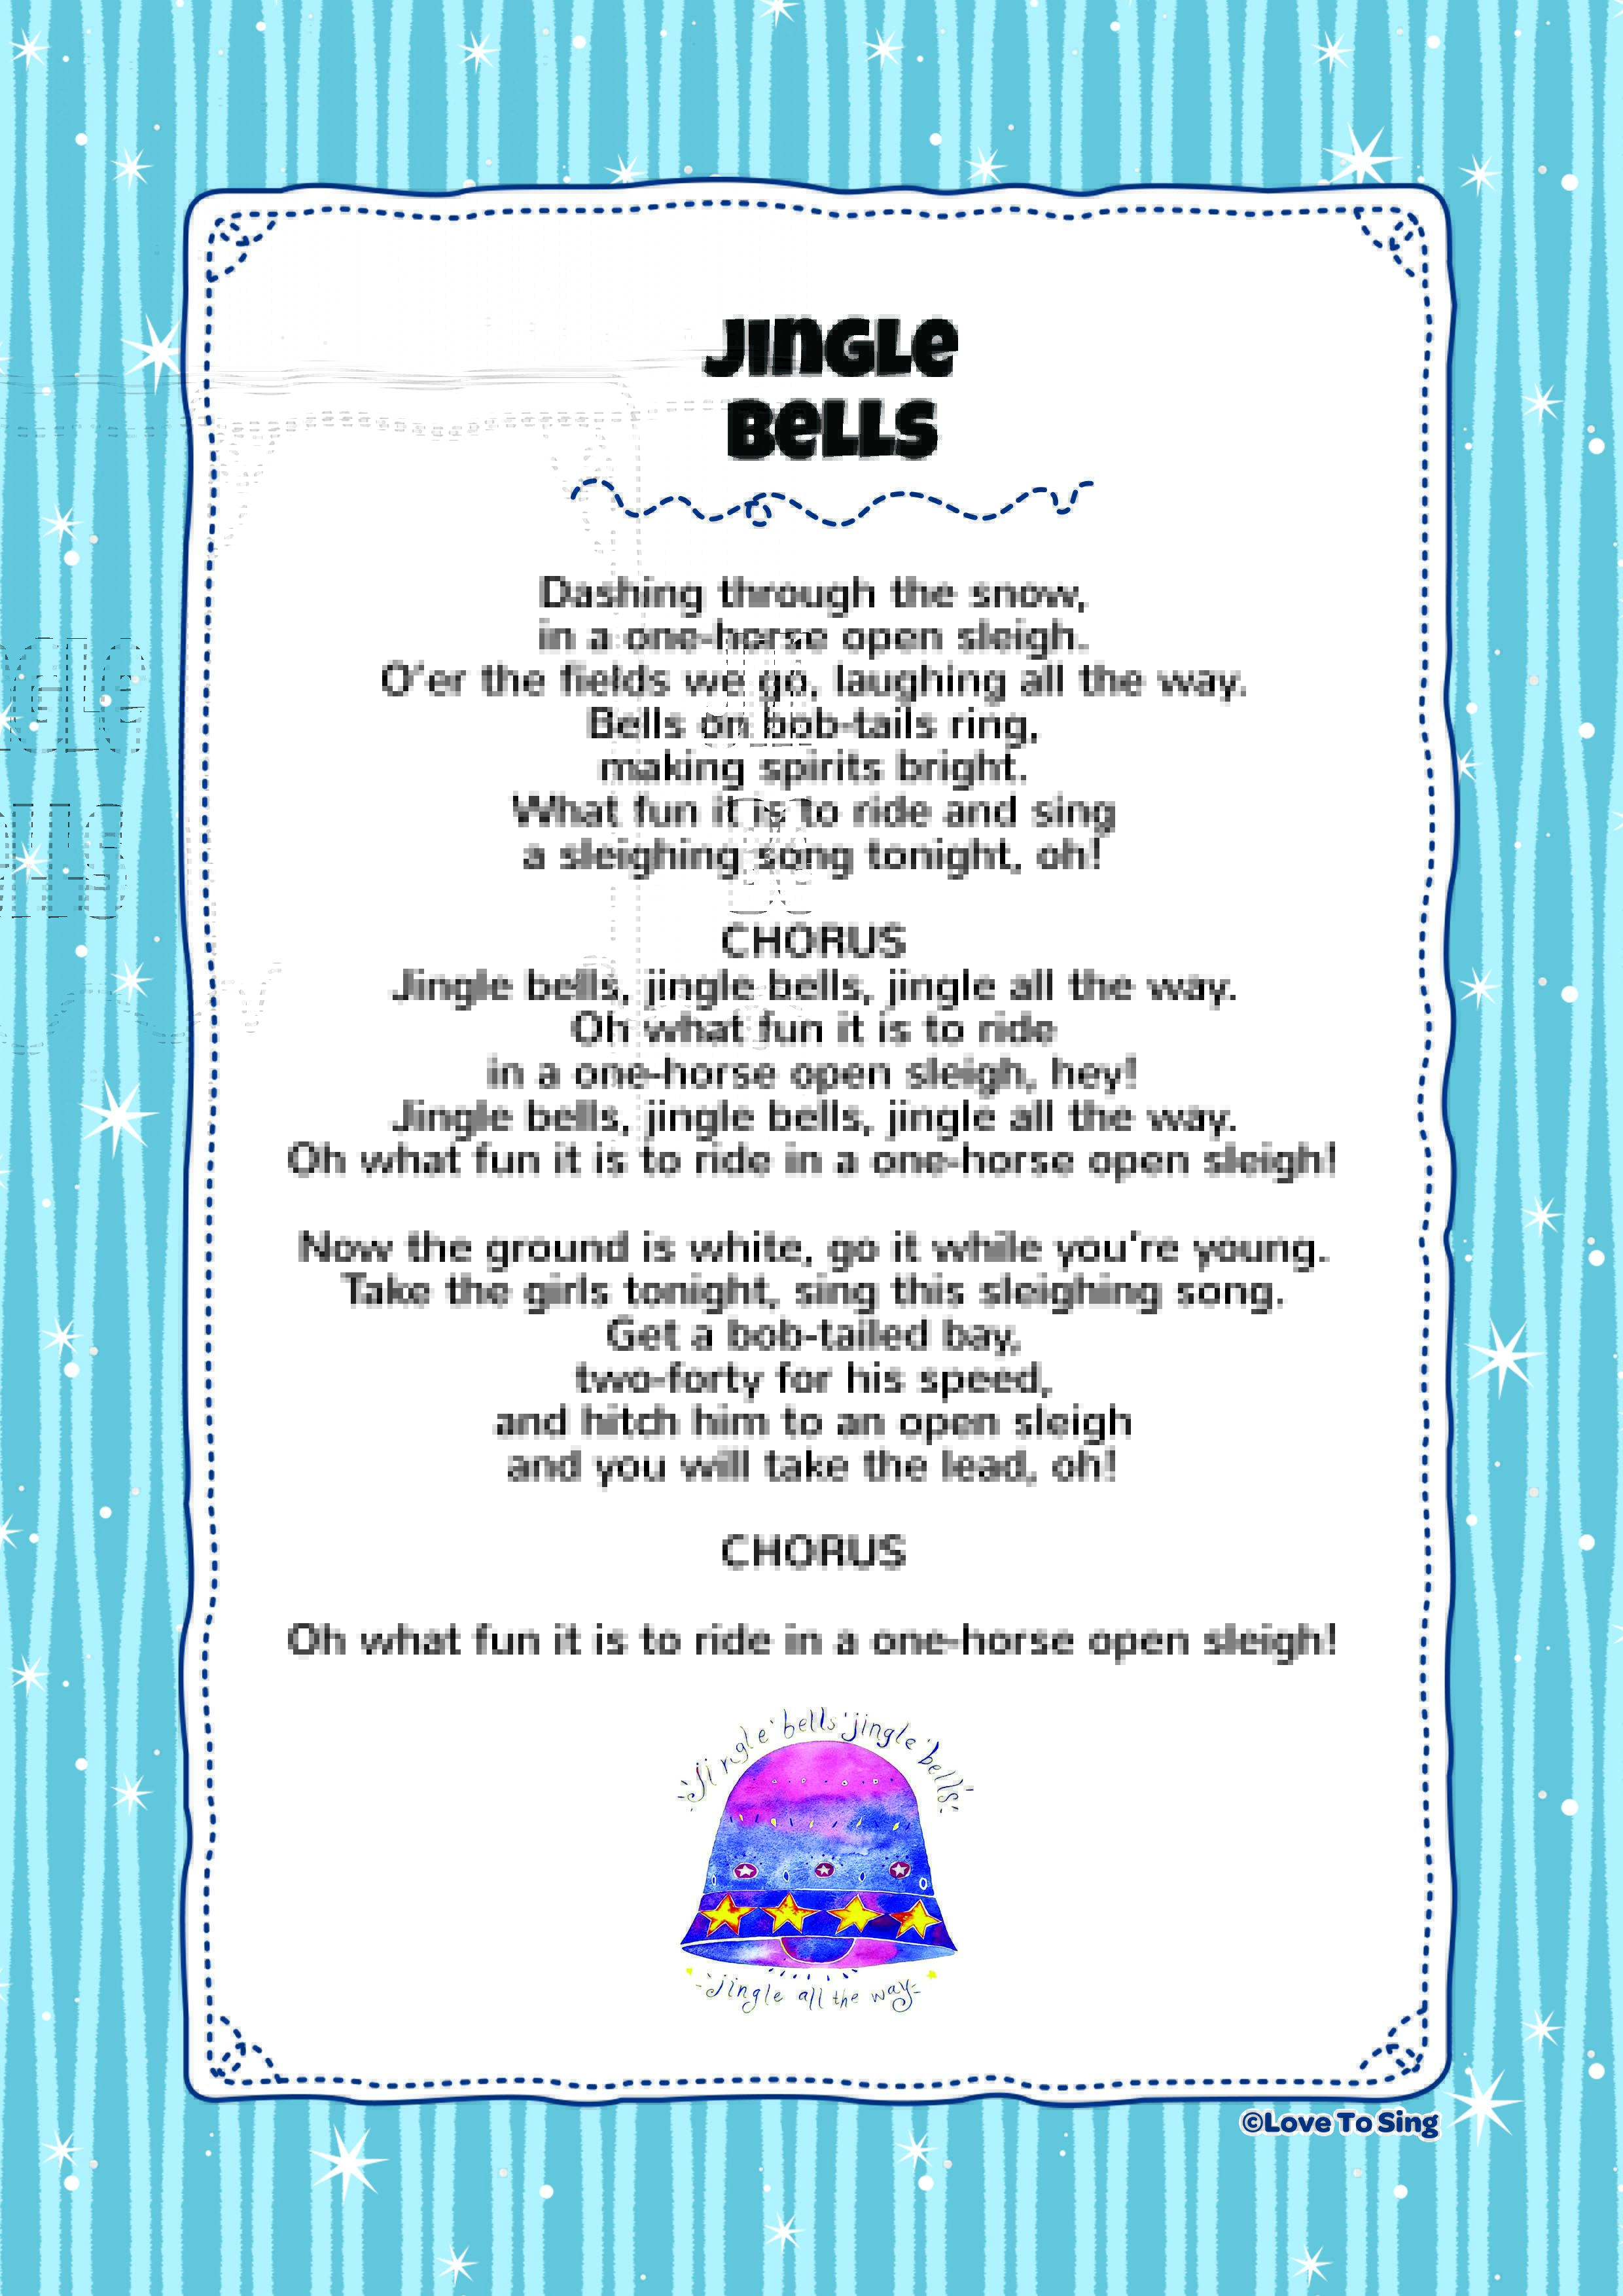 Jingle Bells | Kids Video Song with FREE Lyrics & Activities!